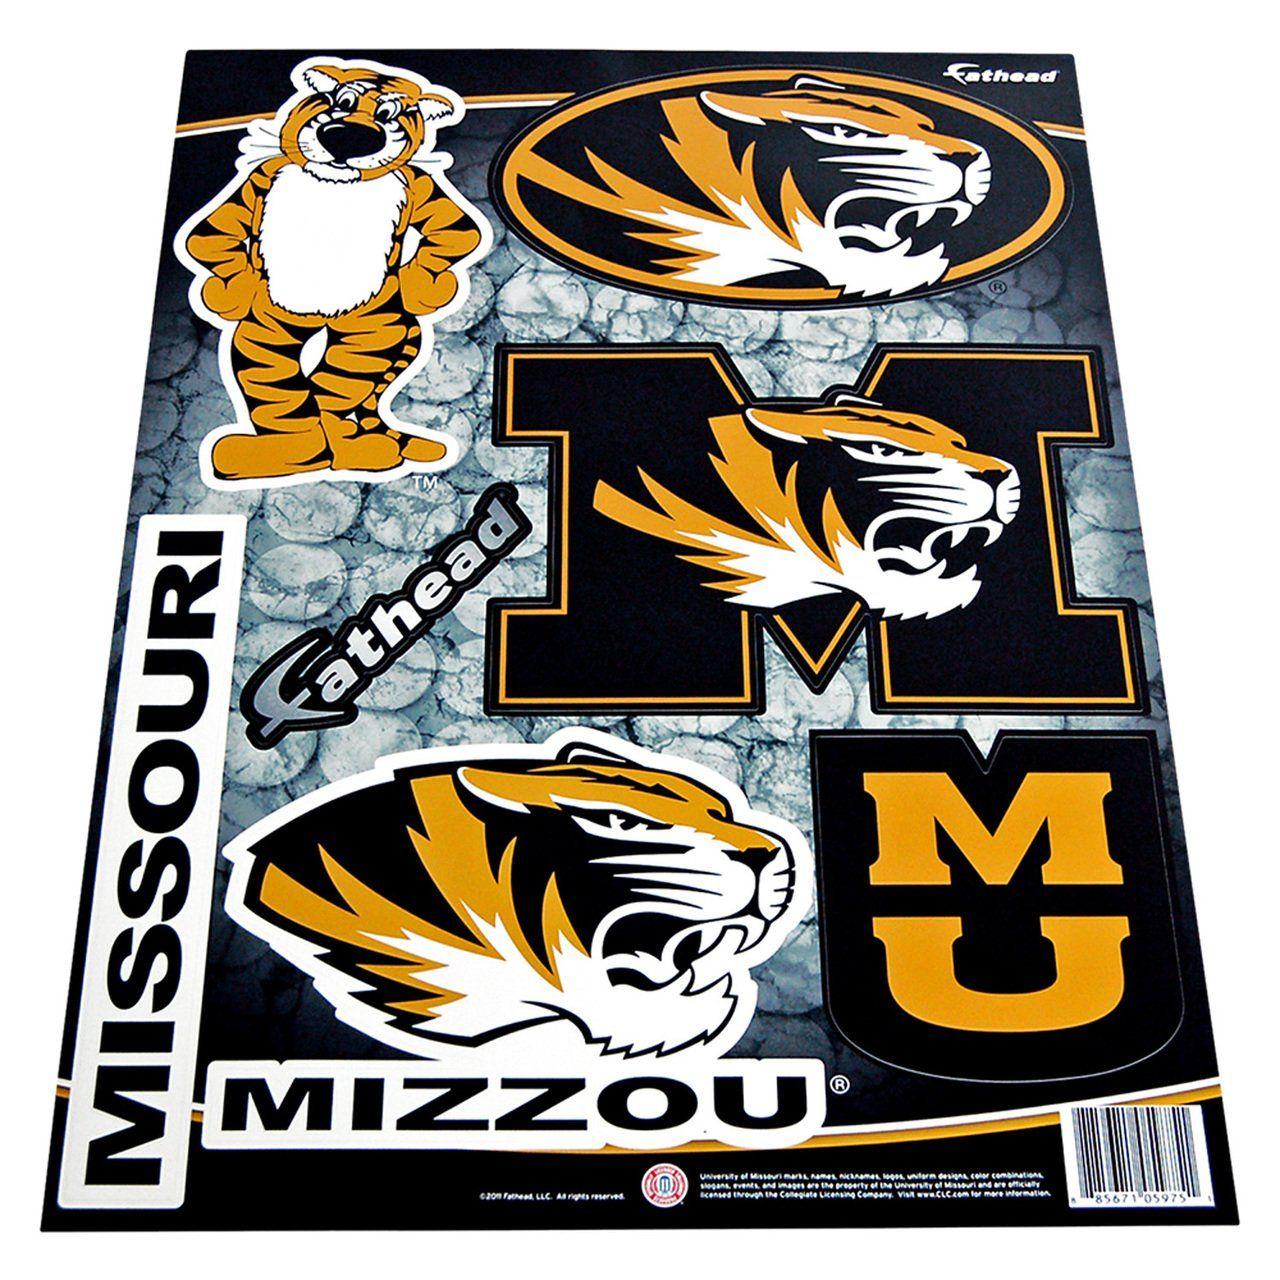 Missouri Tigers Logo - Amazon.com : Missouri Tigers Team Logo Wall Graphic by Fathead ...